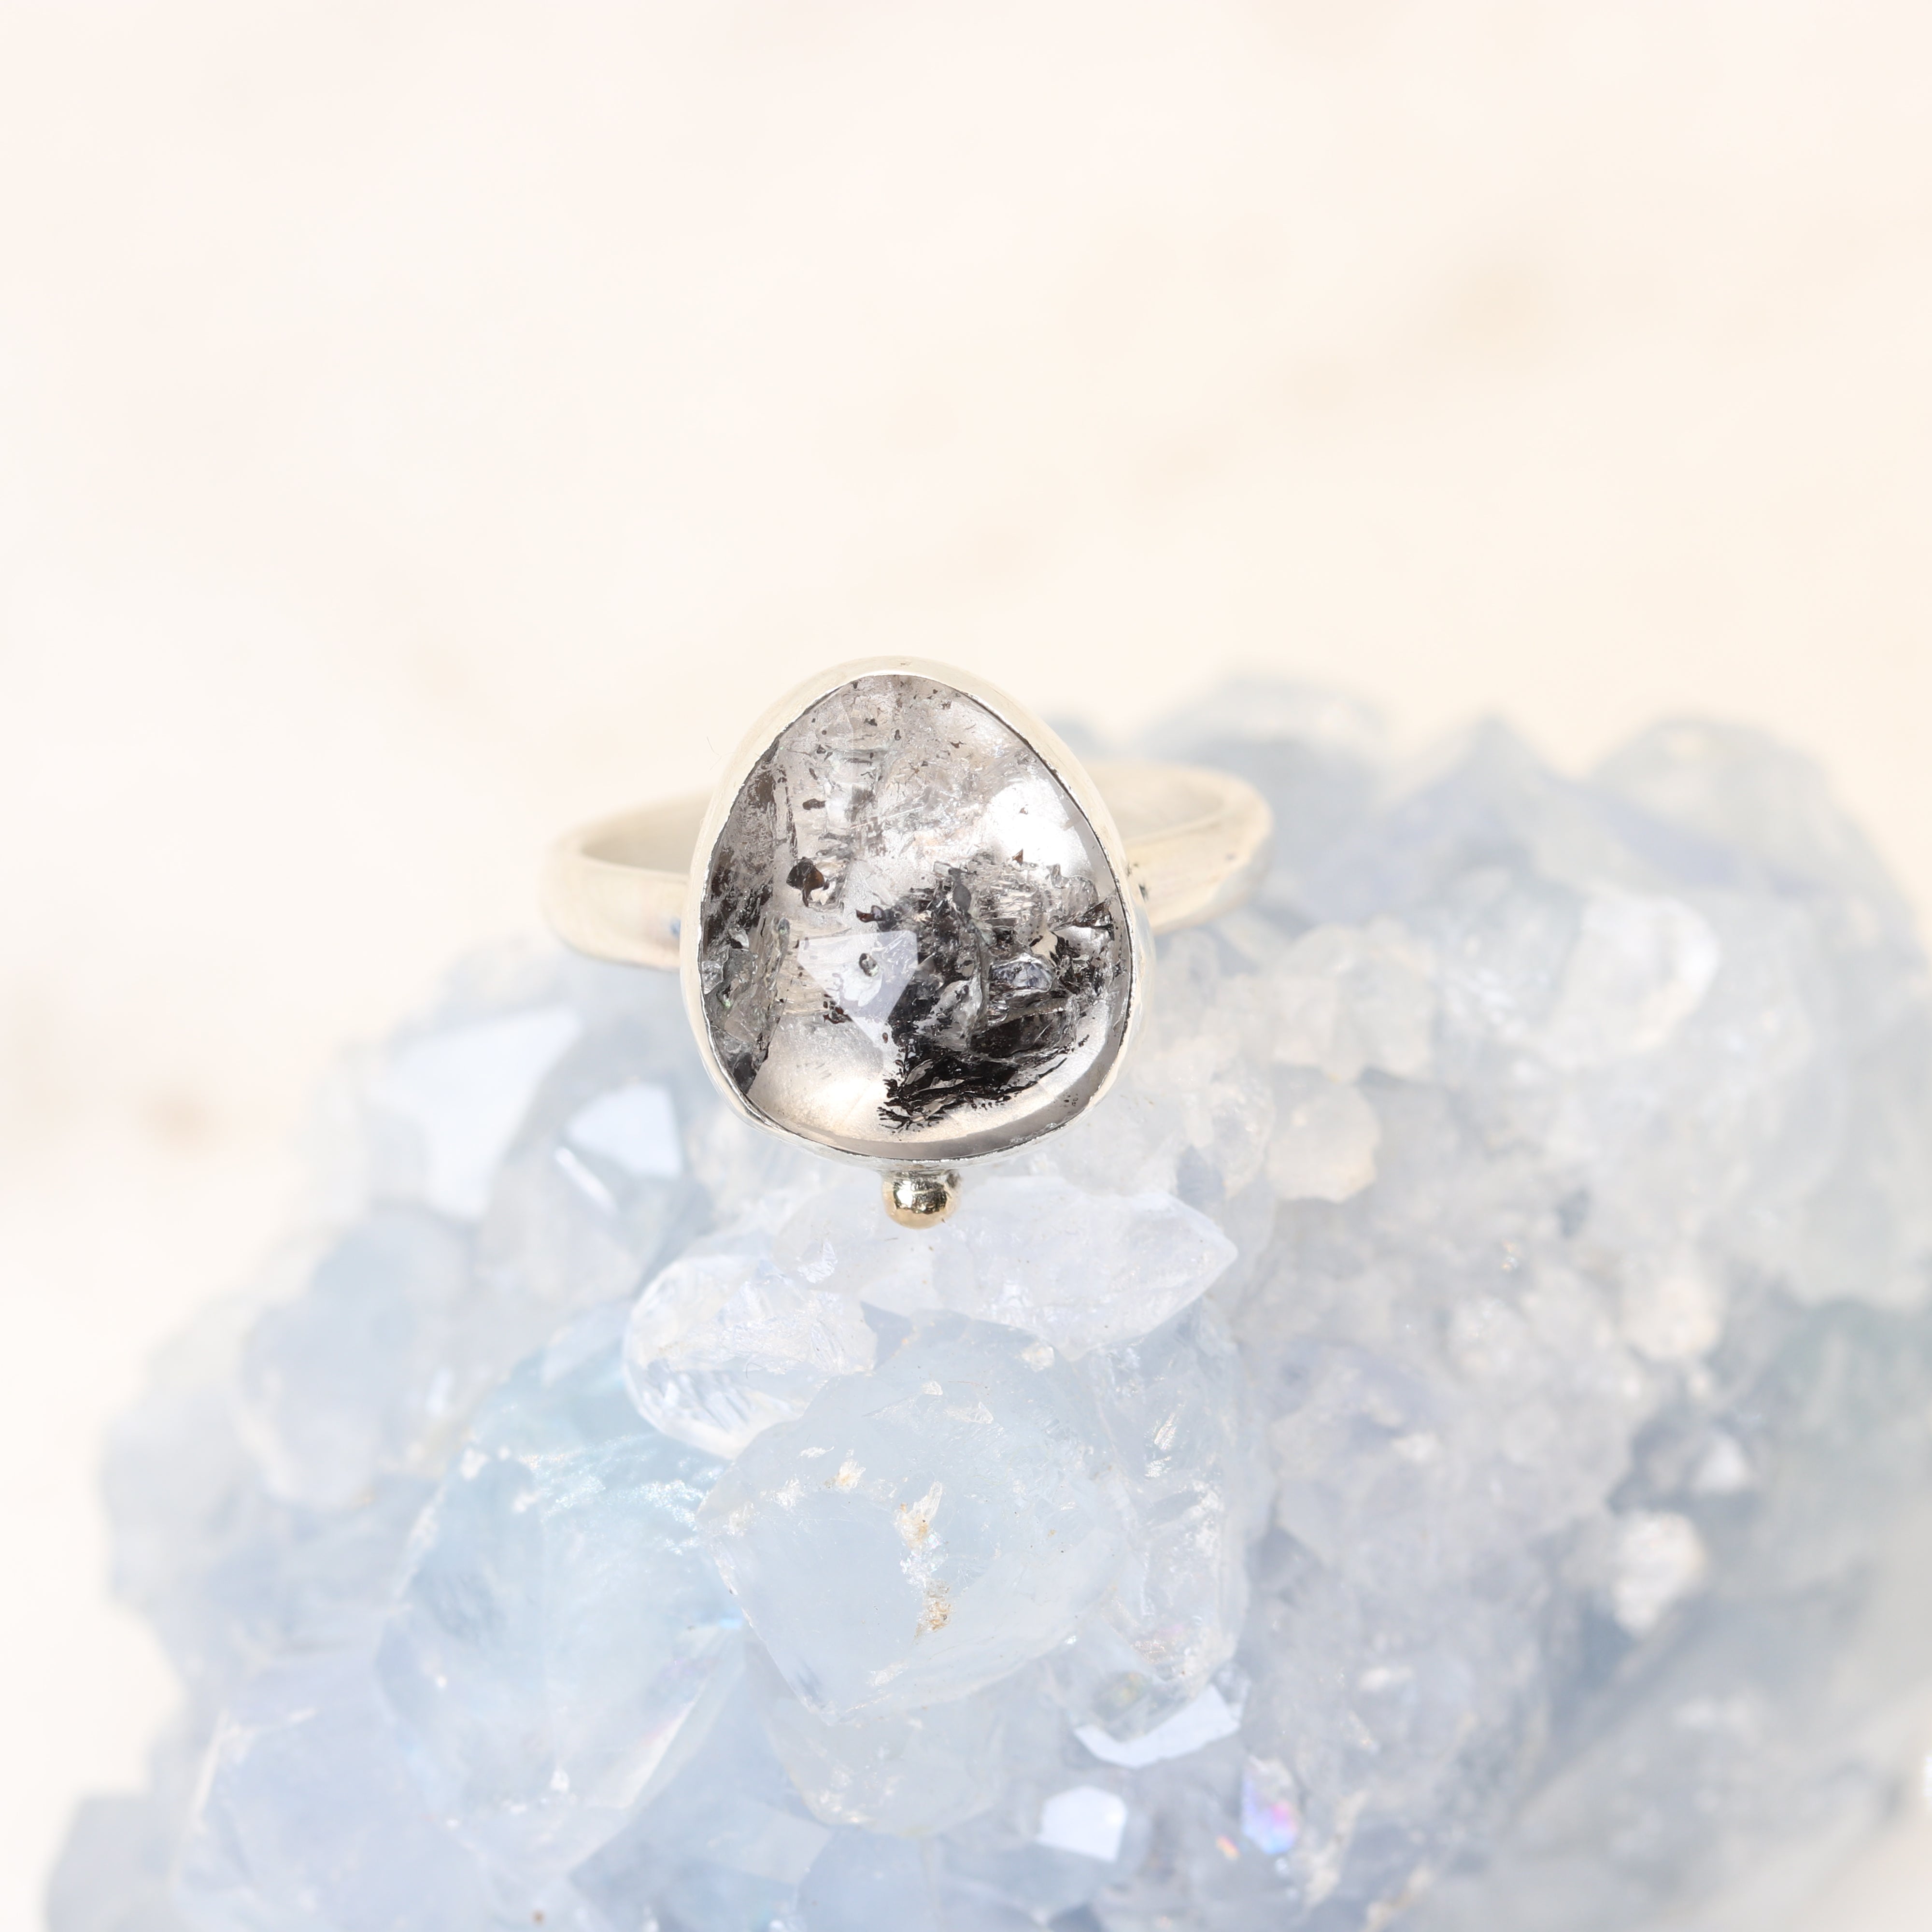 Tibetan quartz gemstone ring